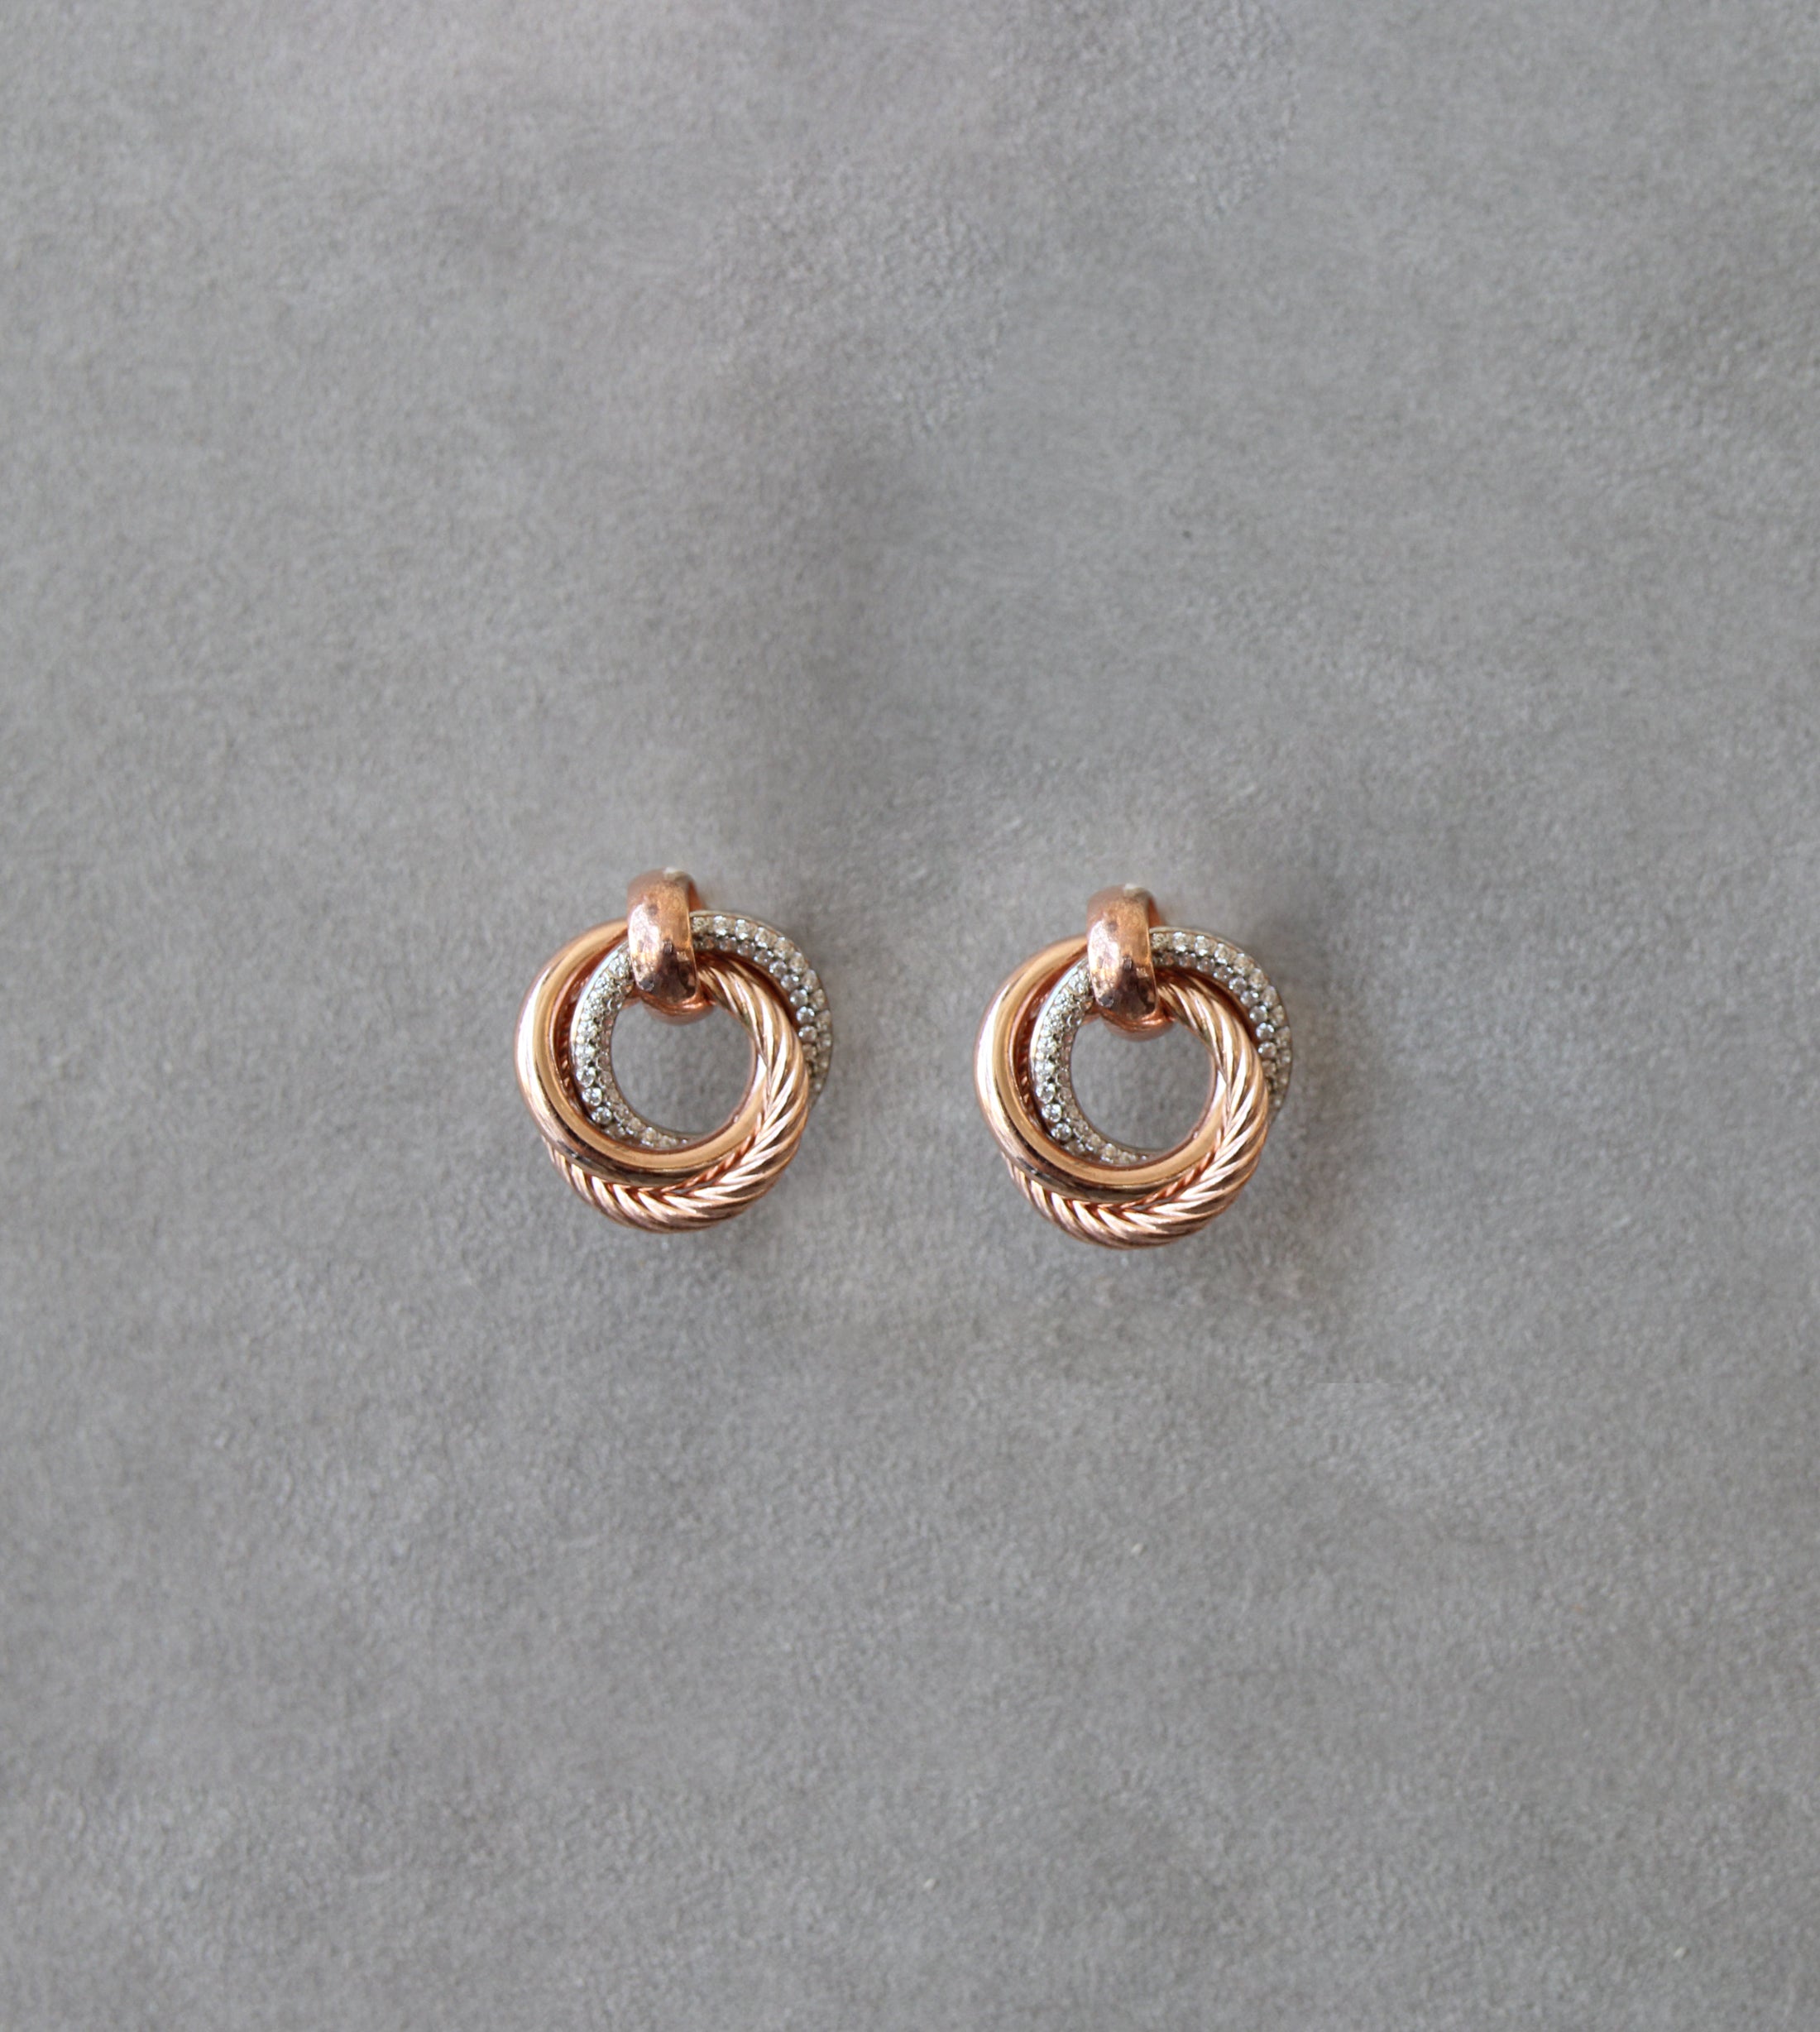 Silver 925 Earrings with Zirconia Stones